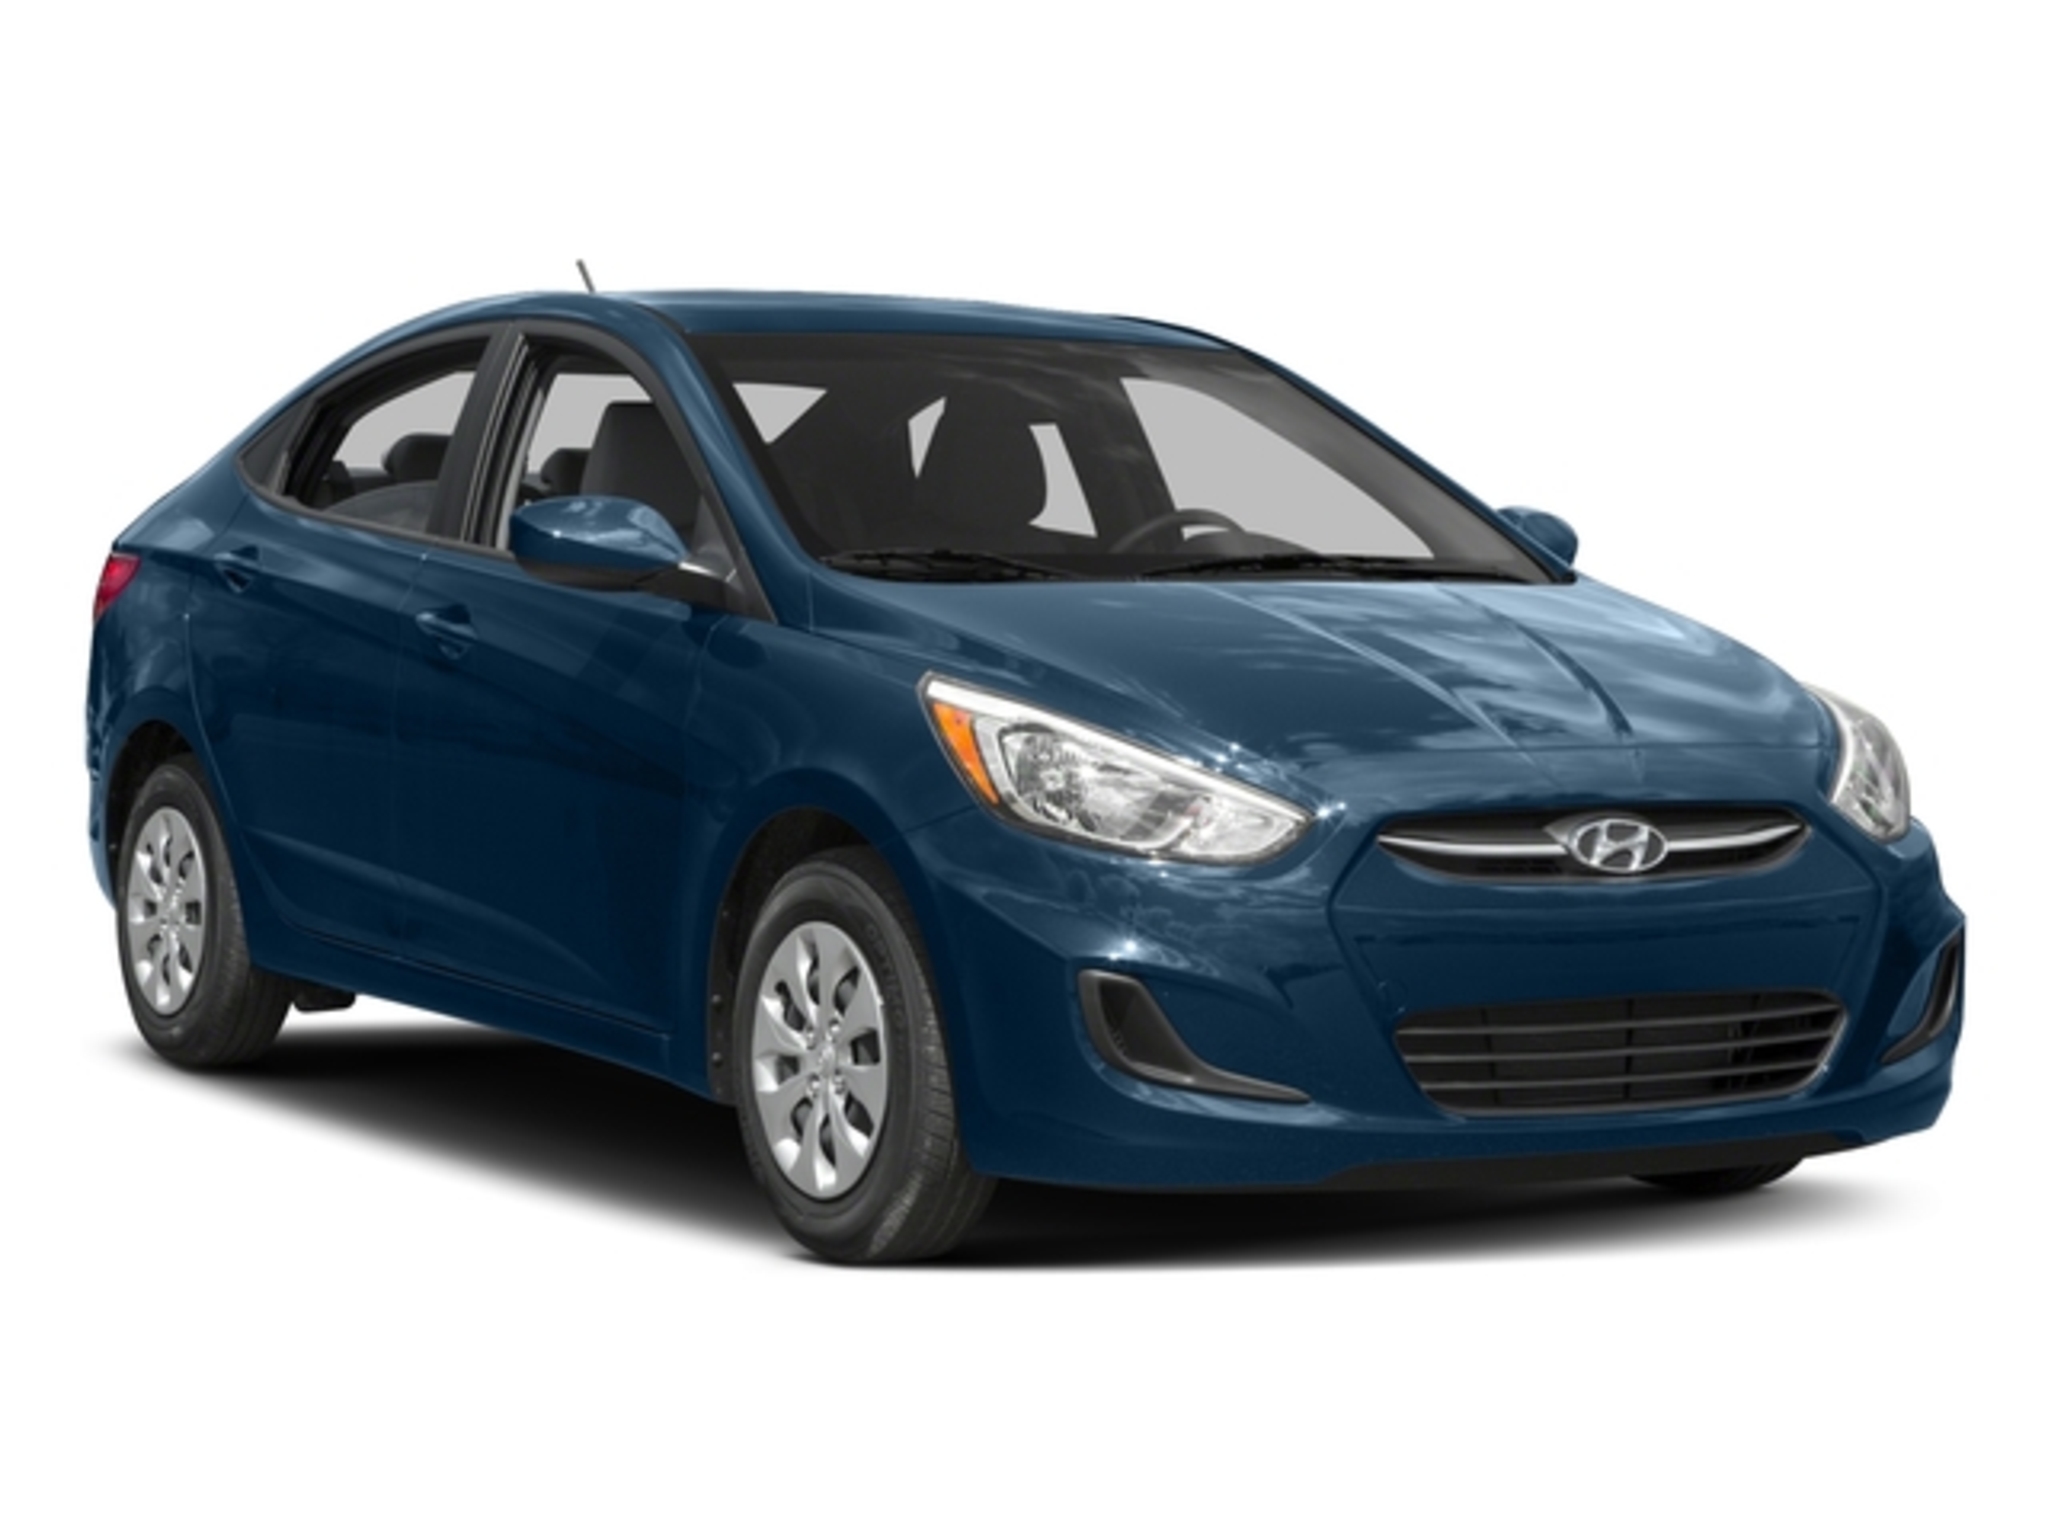 2016 Hyundai Accent - Prices, Trims, Options, Specs, Photos, Reviews ...